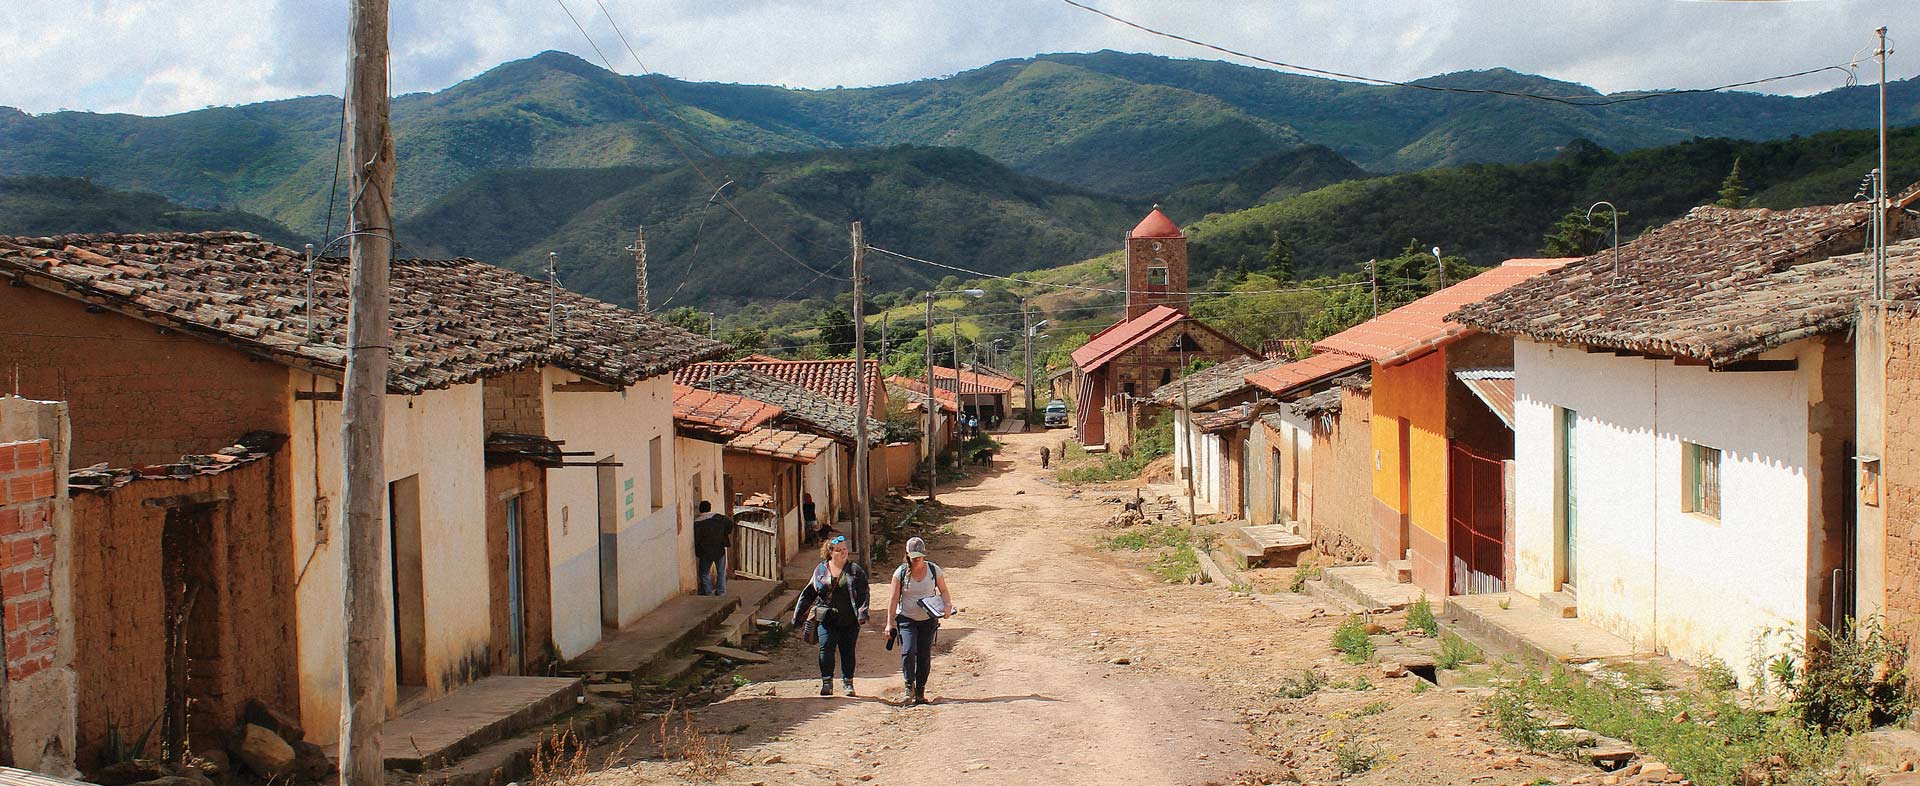 Doctoral students walk through a village in Santa Cruz, Bolivia.